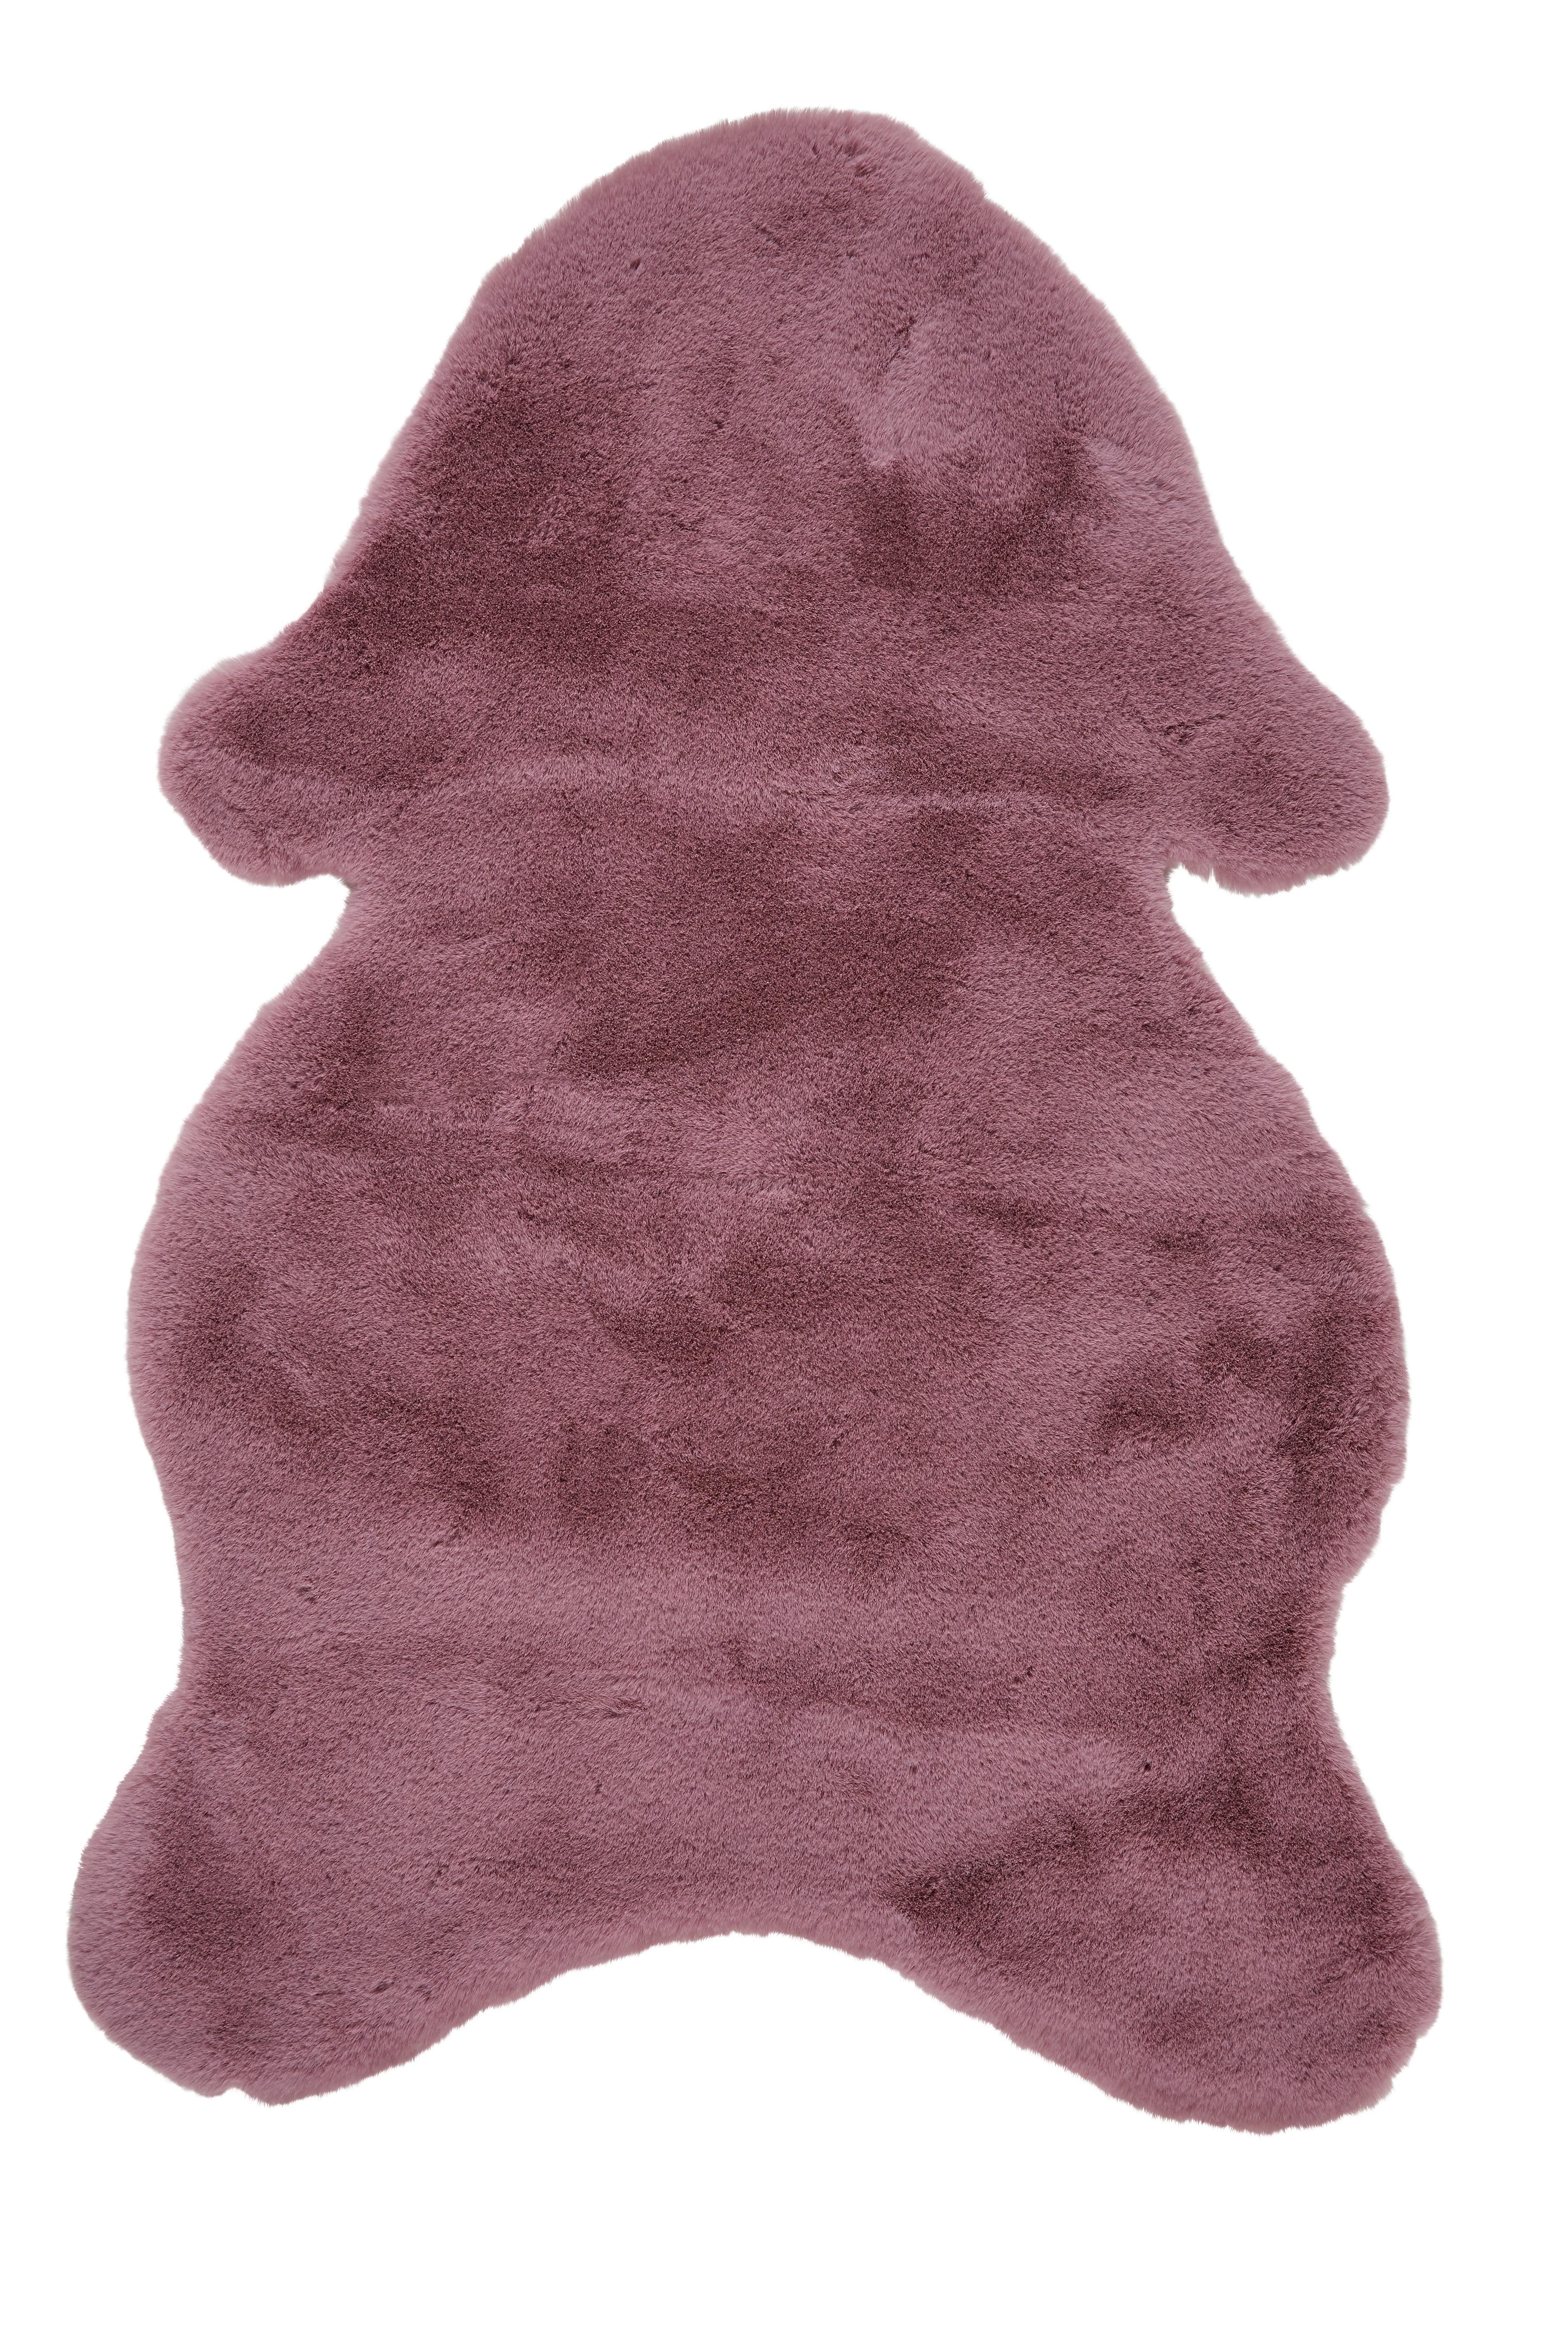 Umělá Kožešina Marlene, 90/60cm, Růžová - růžová, kožešina/textil (90/60cm) - Modern Living